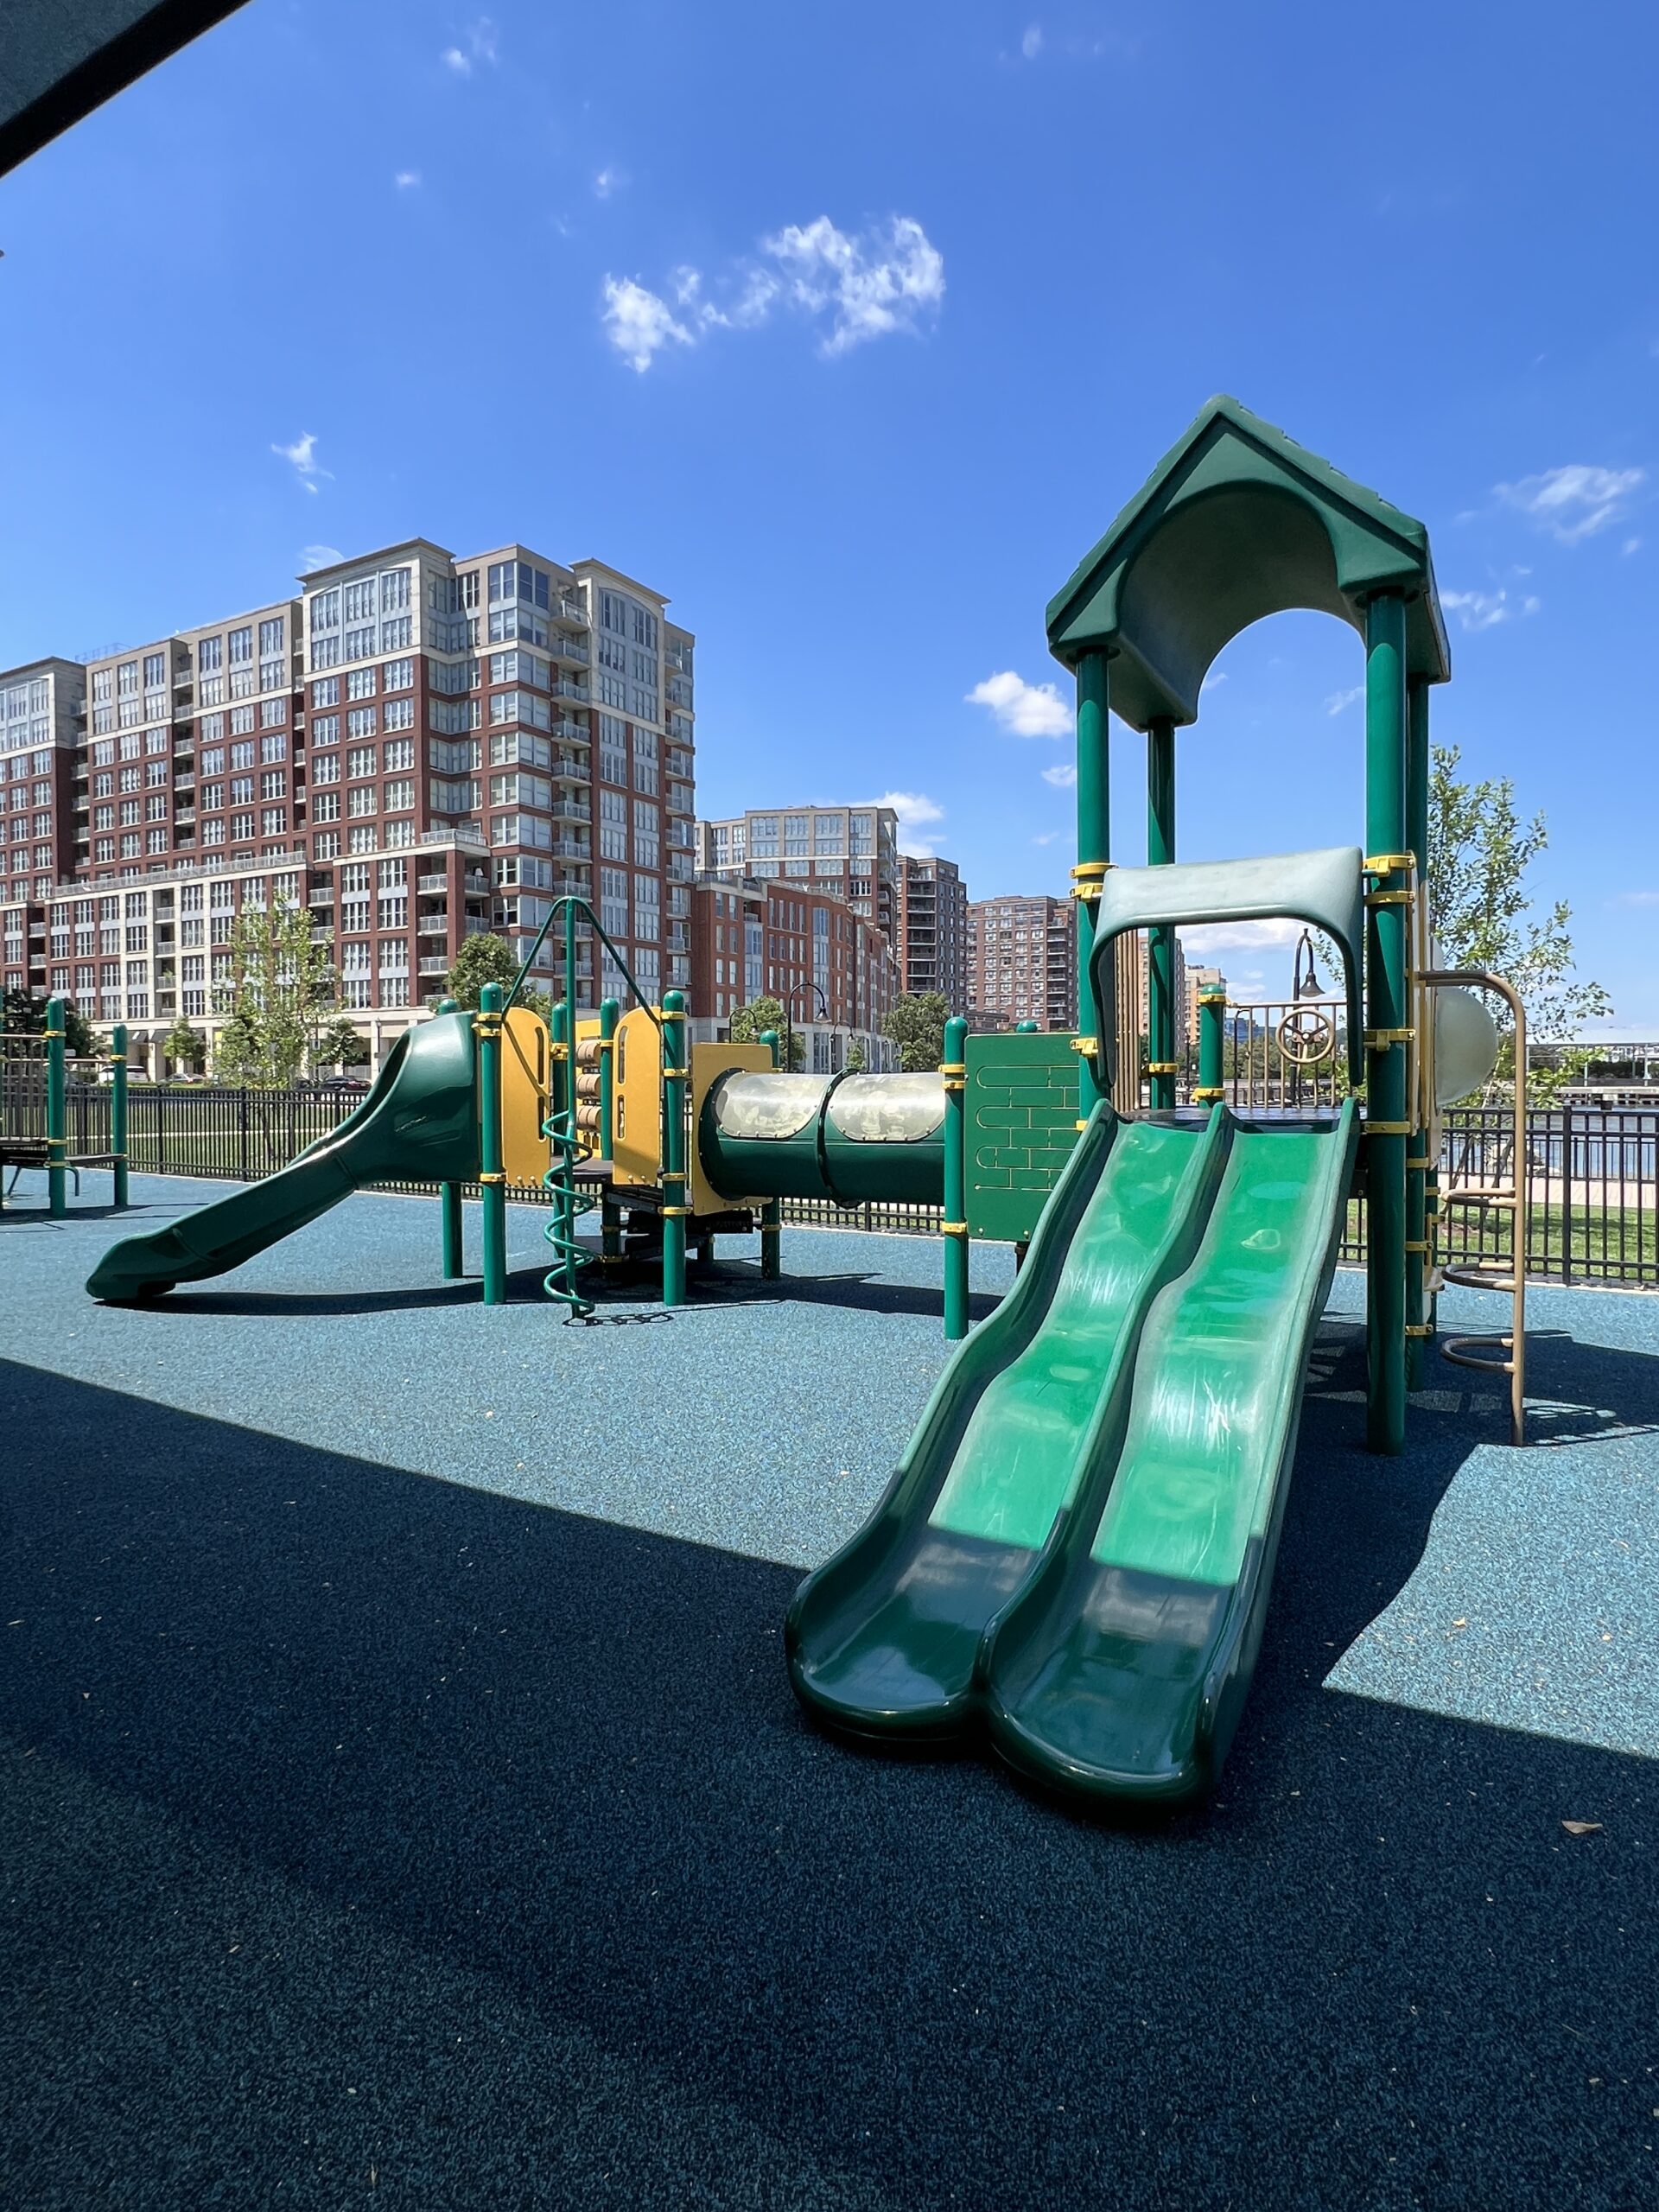 Maxwell Place Park Playground in Hoboken NJ - SLIDE - side by side wavy slide